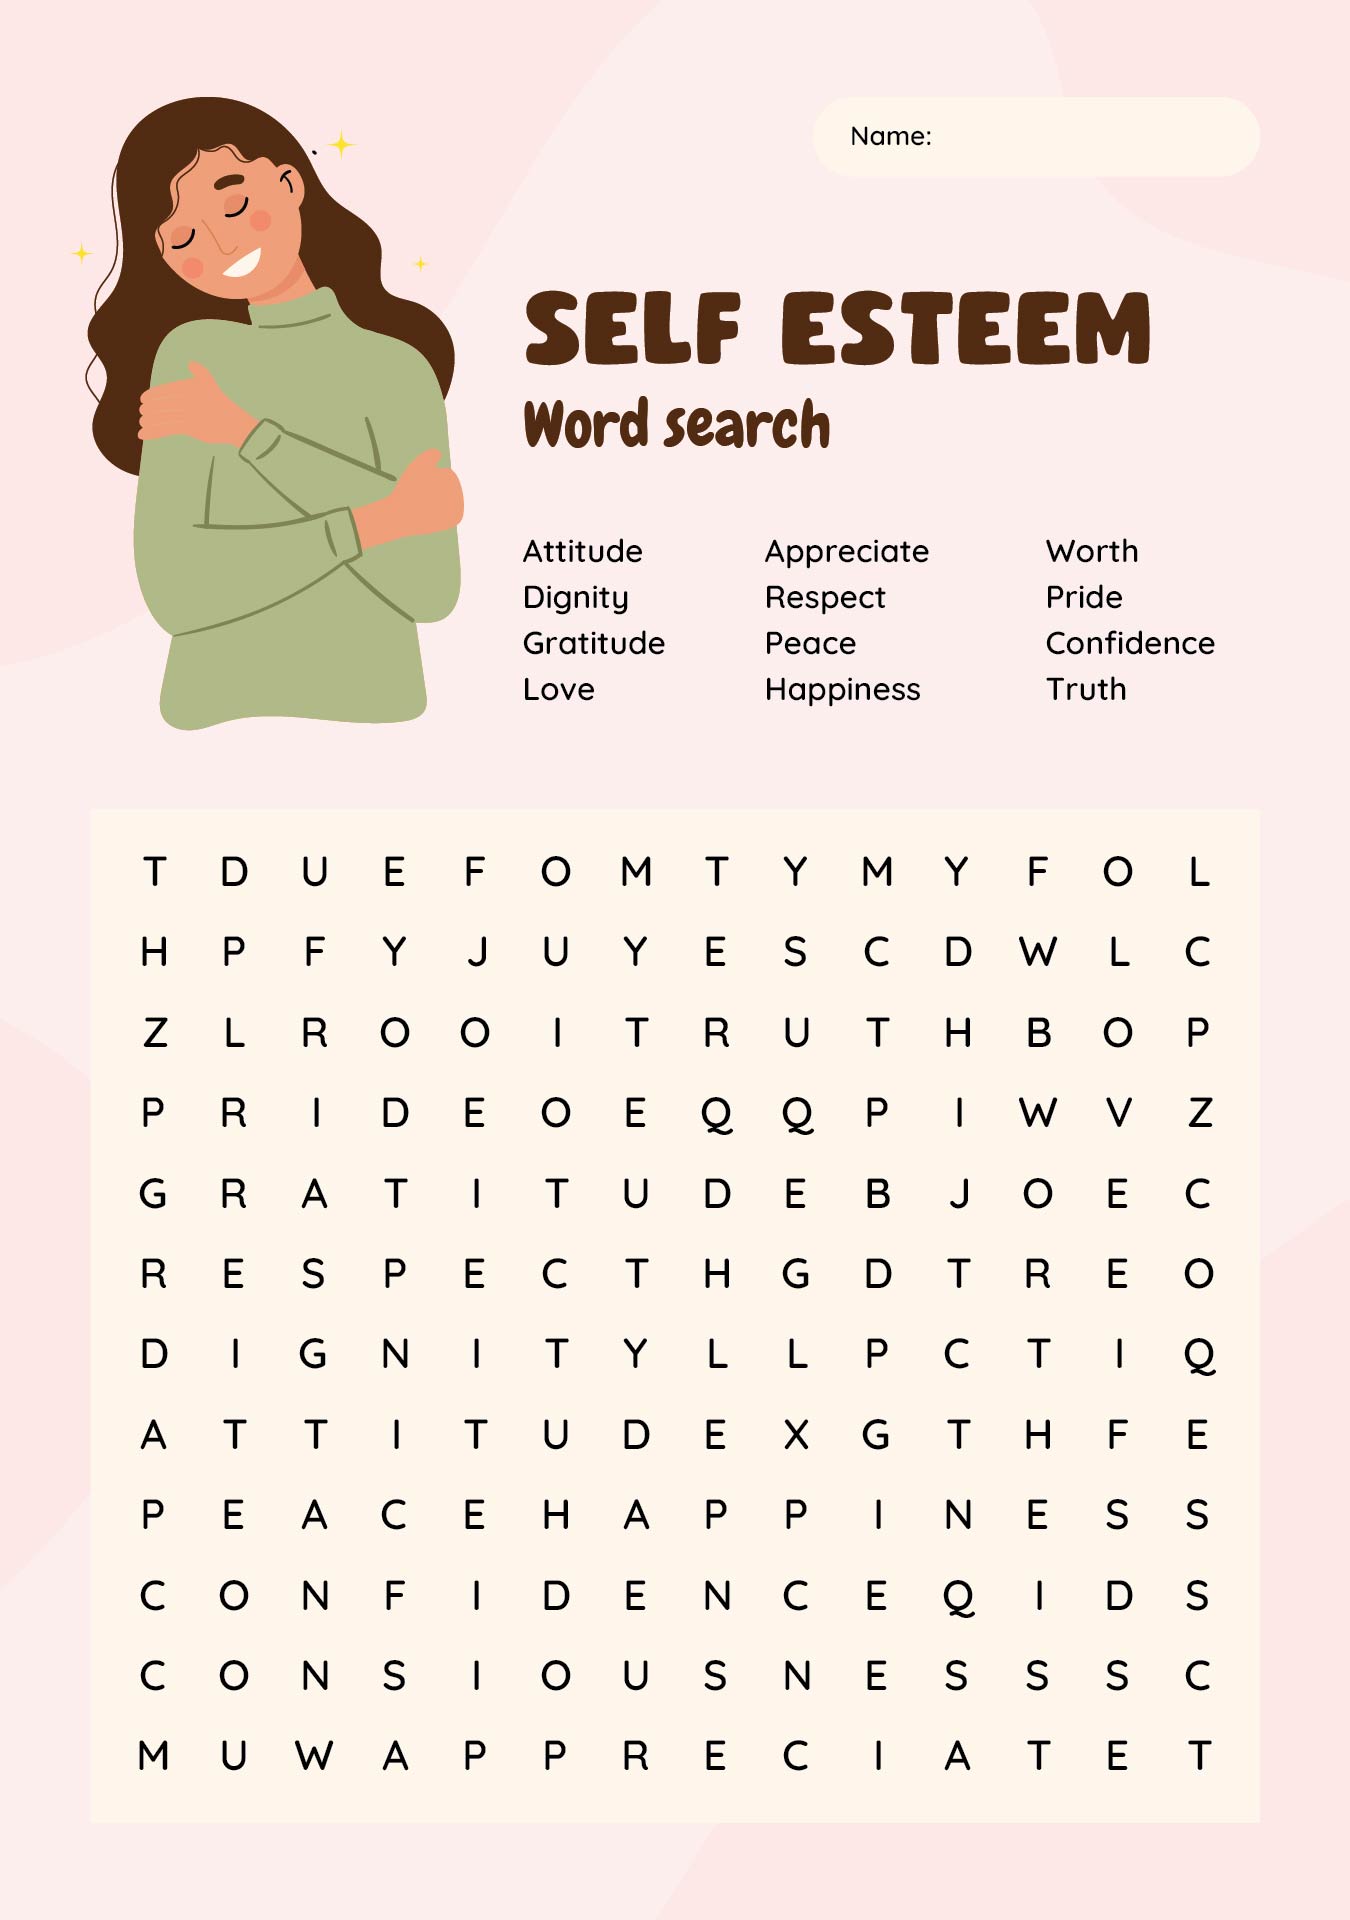 Self-Esteem Word Search